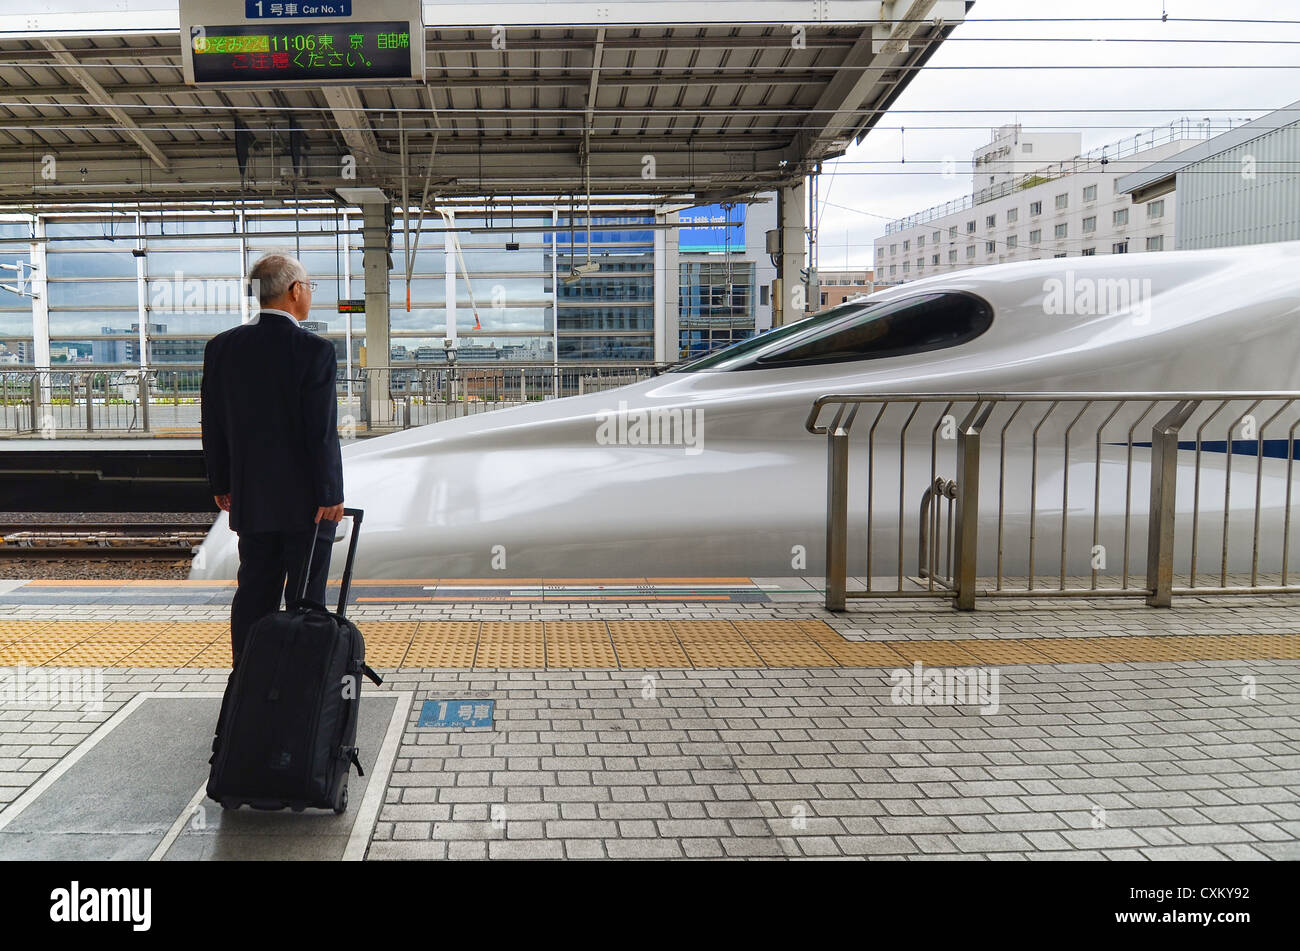 A passenger waits on a station platform as a bullet train arrives. Stock Photo